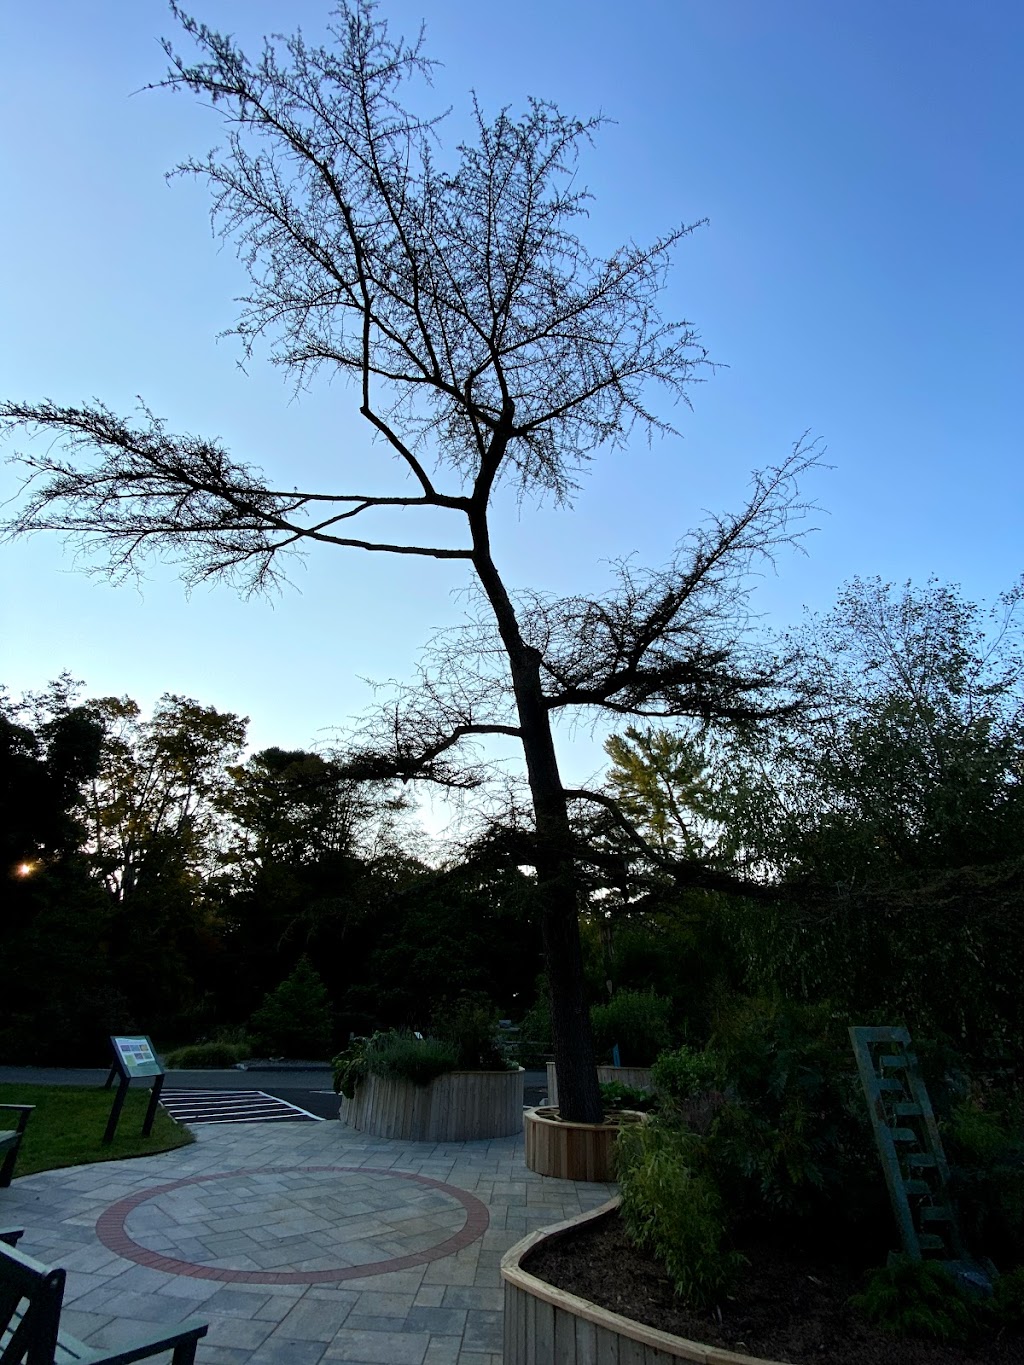 The Sensory Garden | The Homestead Building @ The Bartlett Arboretum, 107, 141 Brookdale Rd, Stamford, CT 06903 | Phone: (203) 322-6971